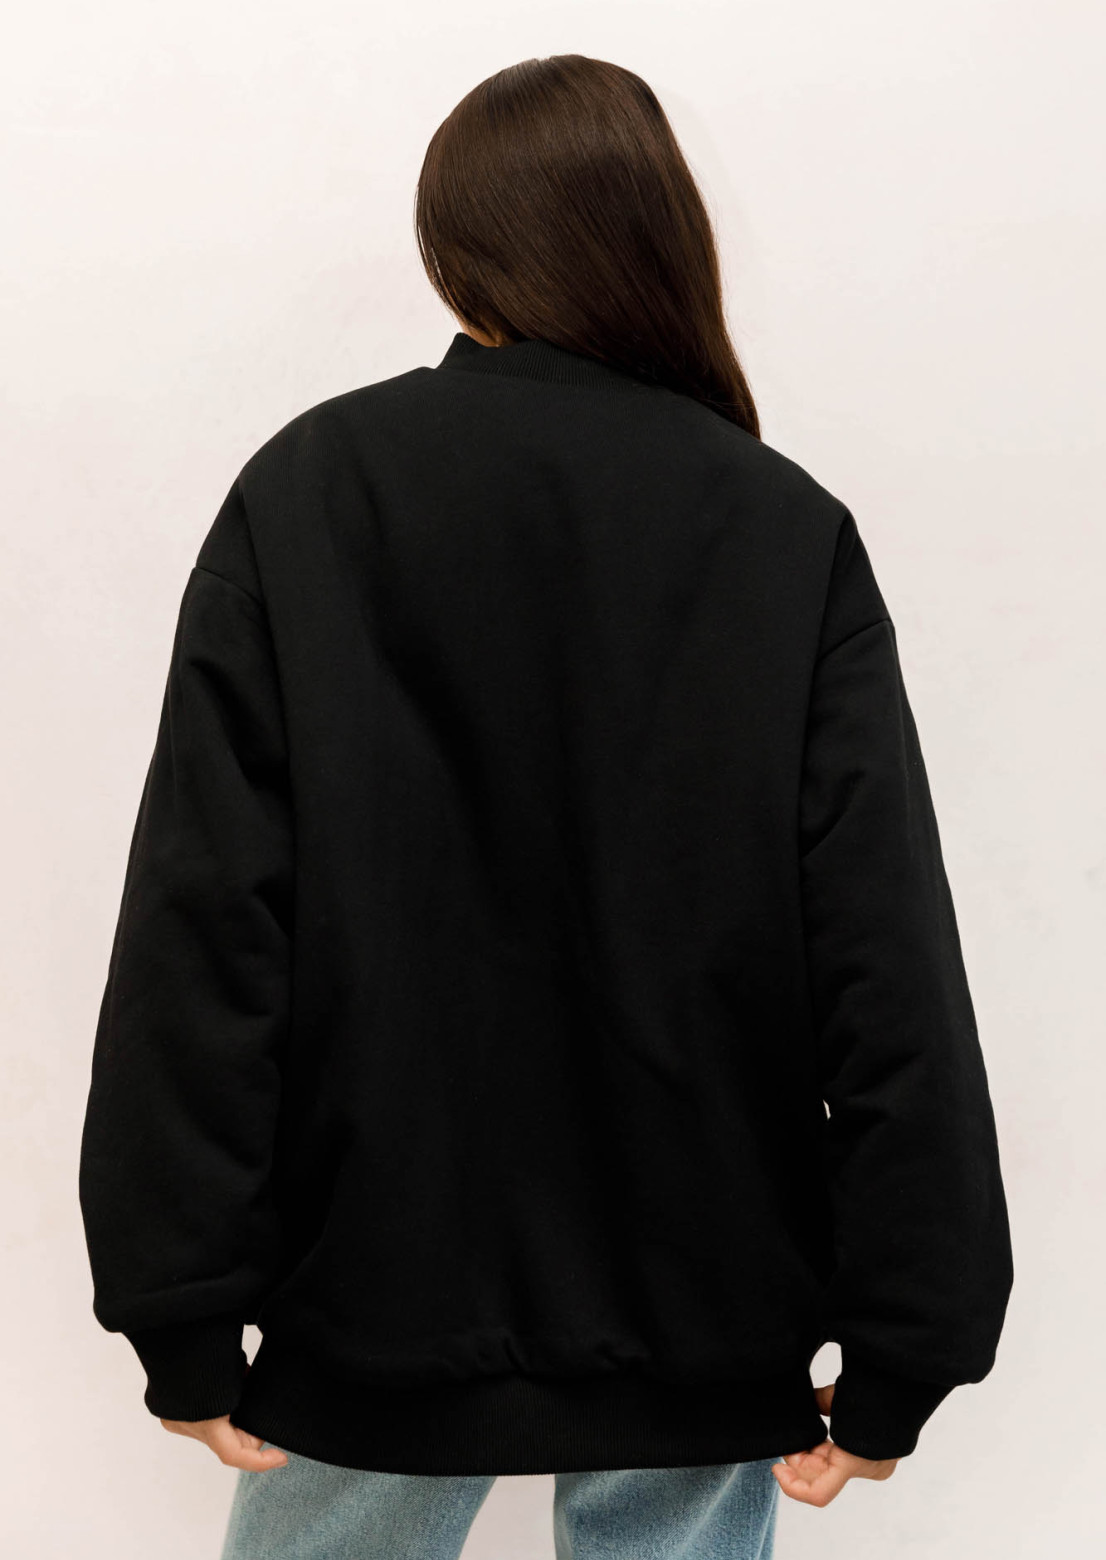 Black bomber jacket made of dense three-thread